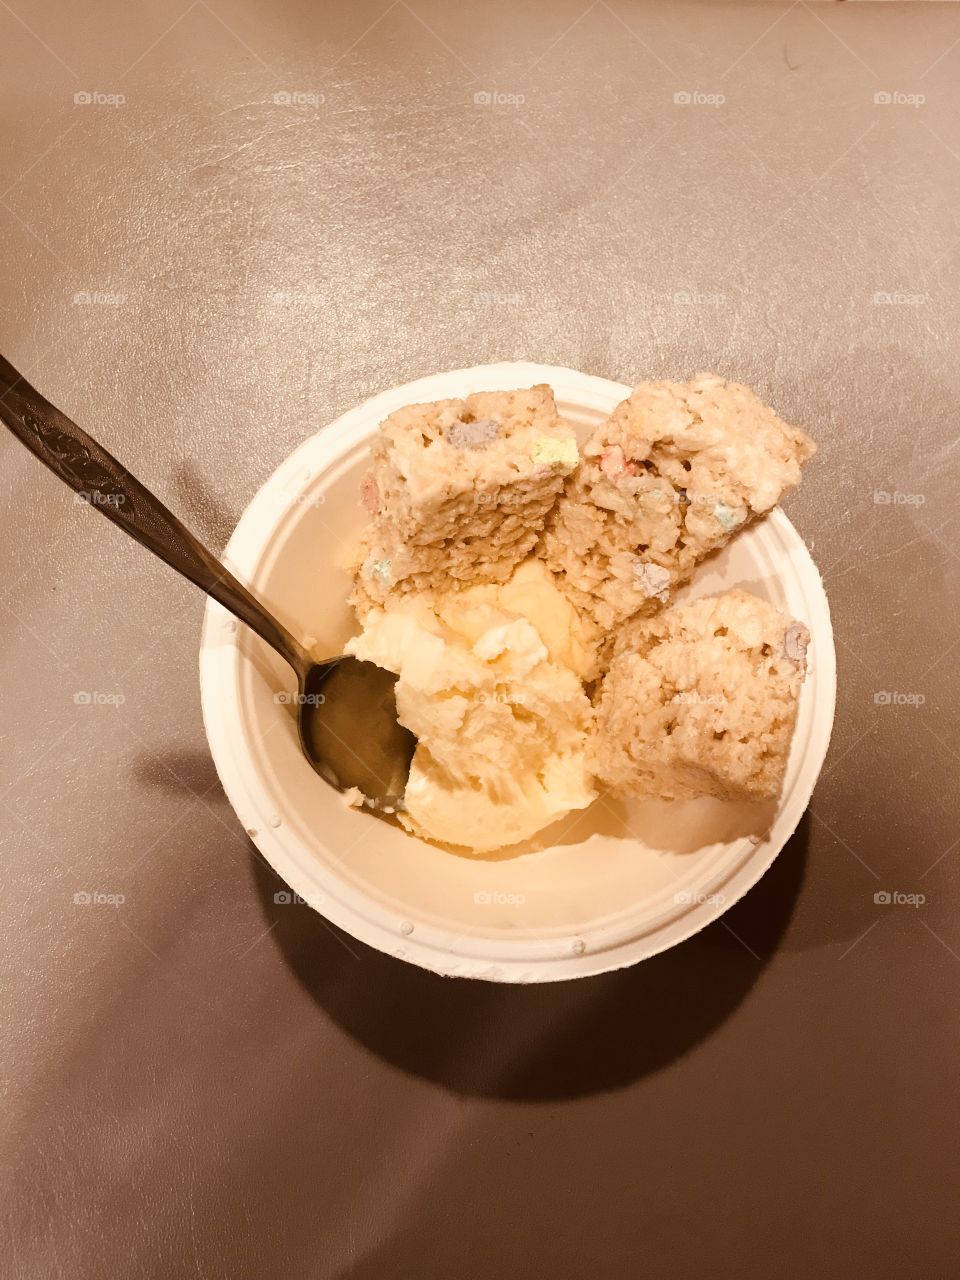  Ice cream and rice crispies